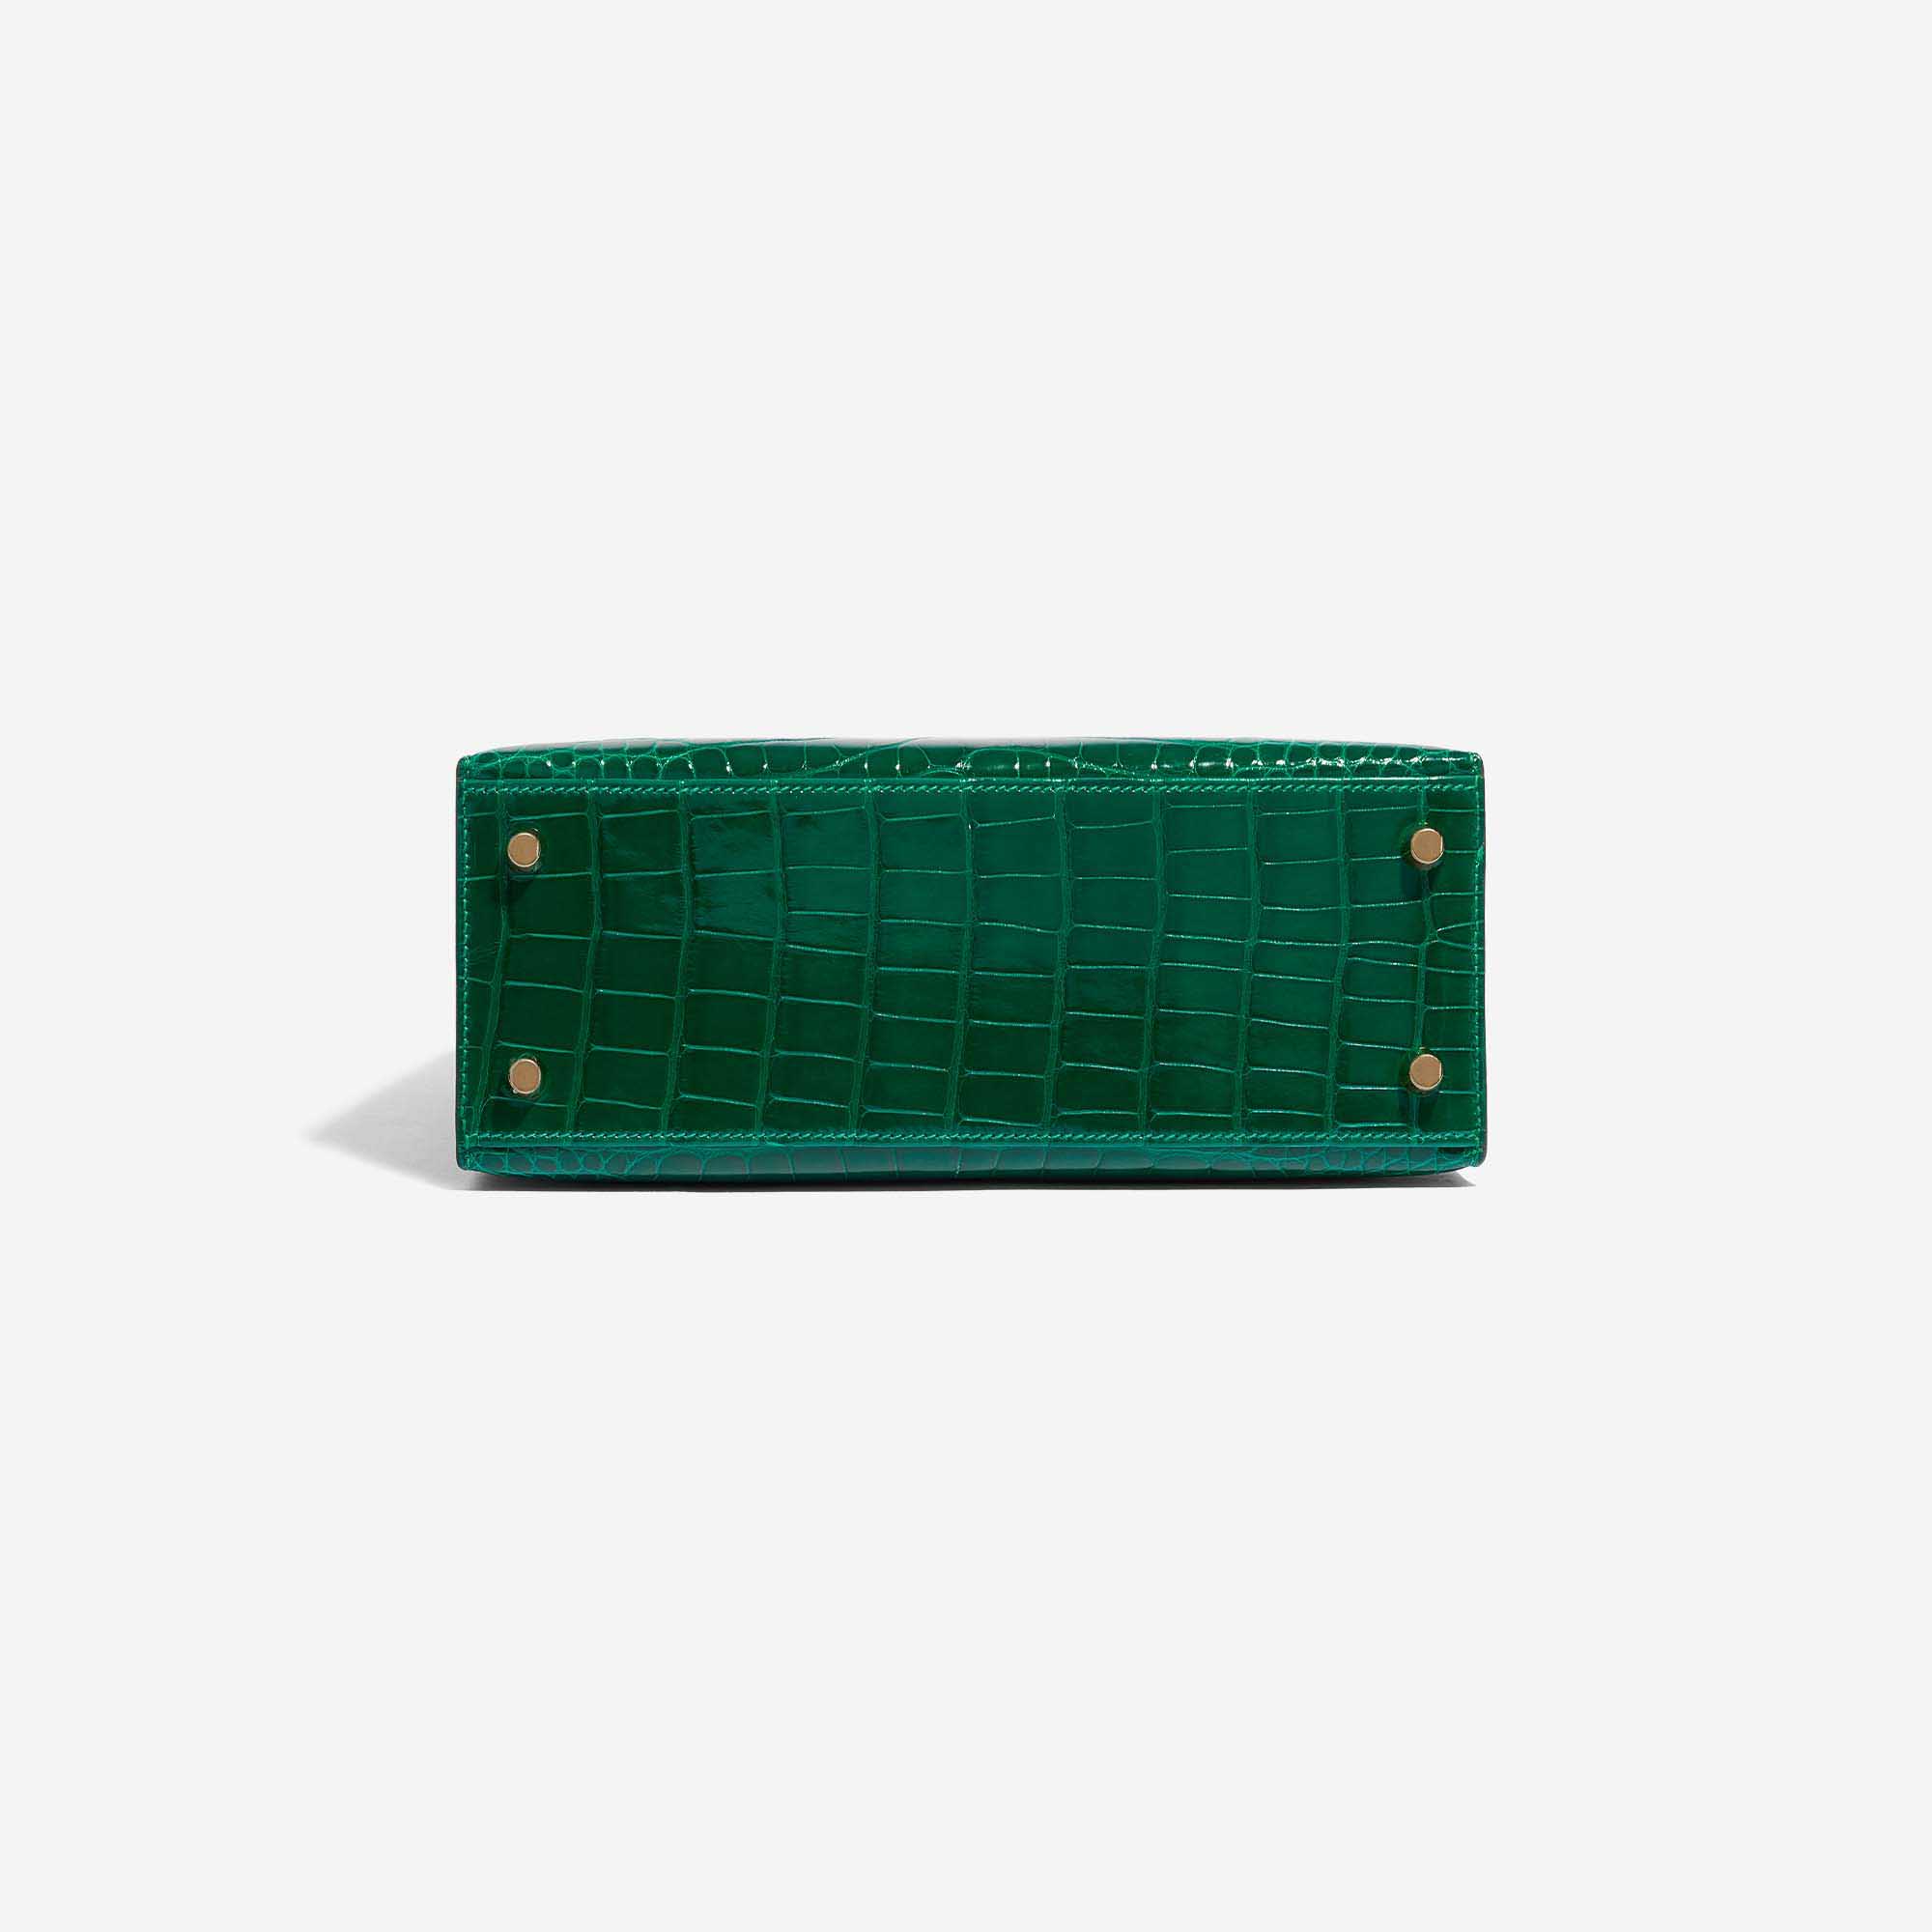 Kelly Hermès Hermes 24/24 Bag size 29 cm Vert Vérone. Green